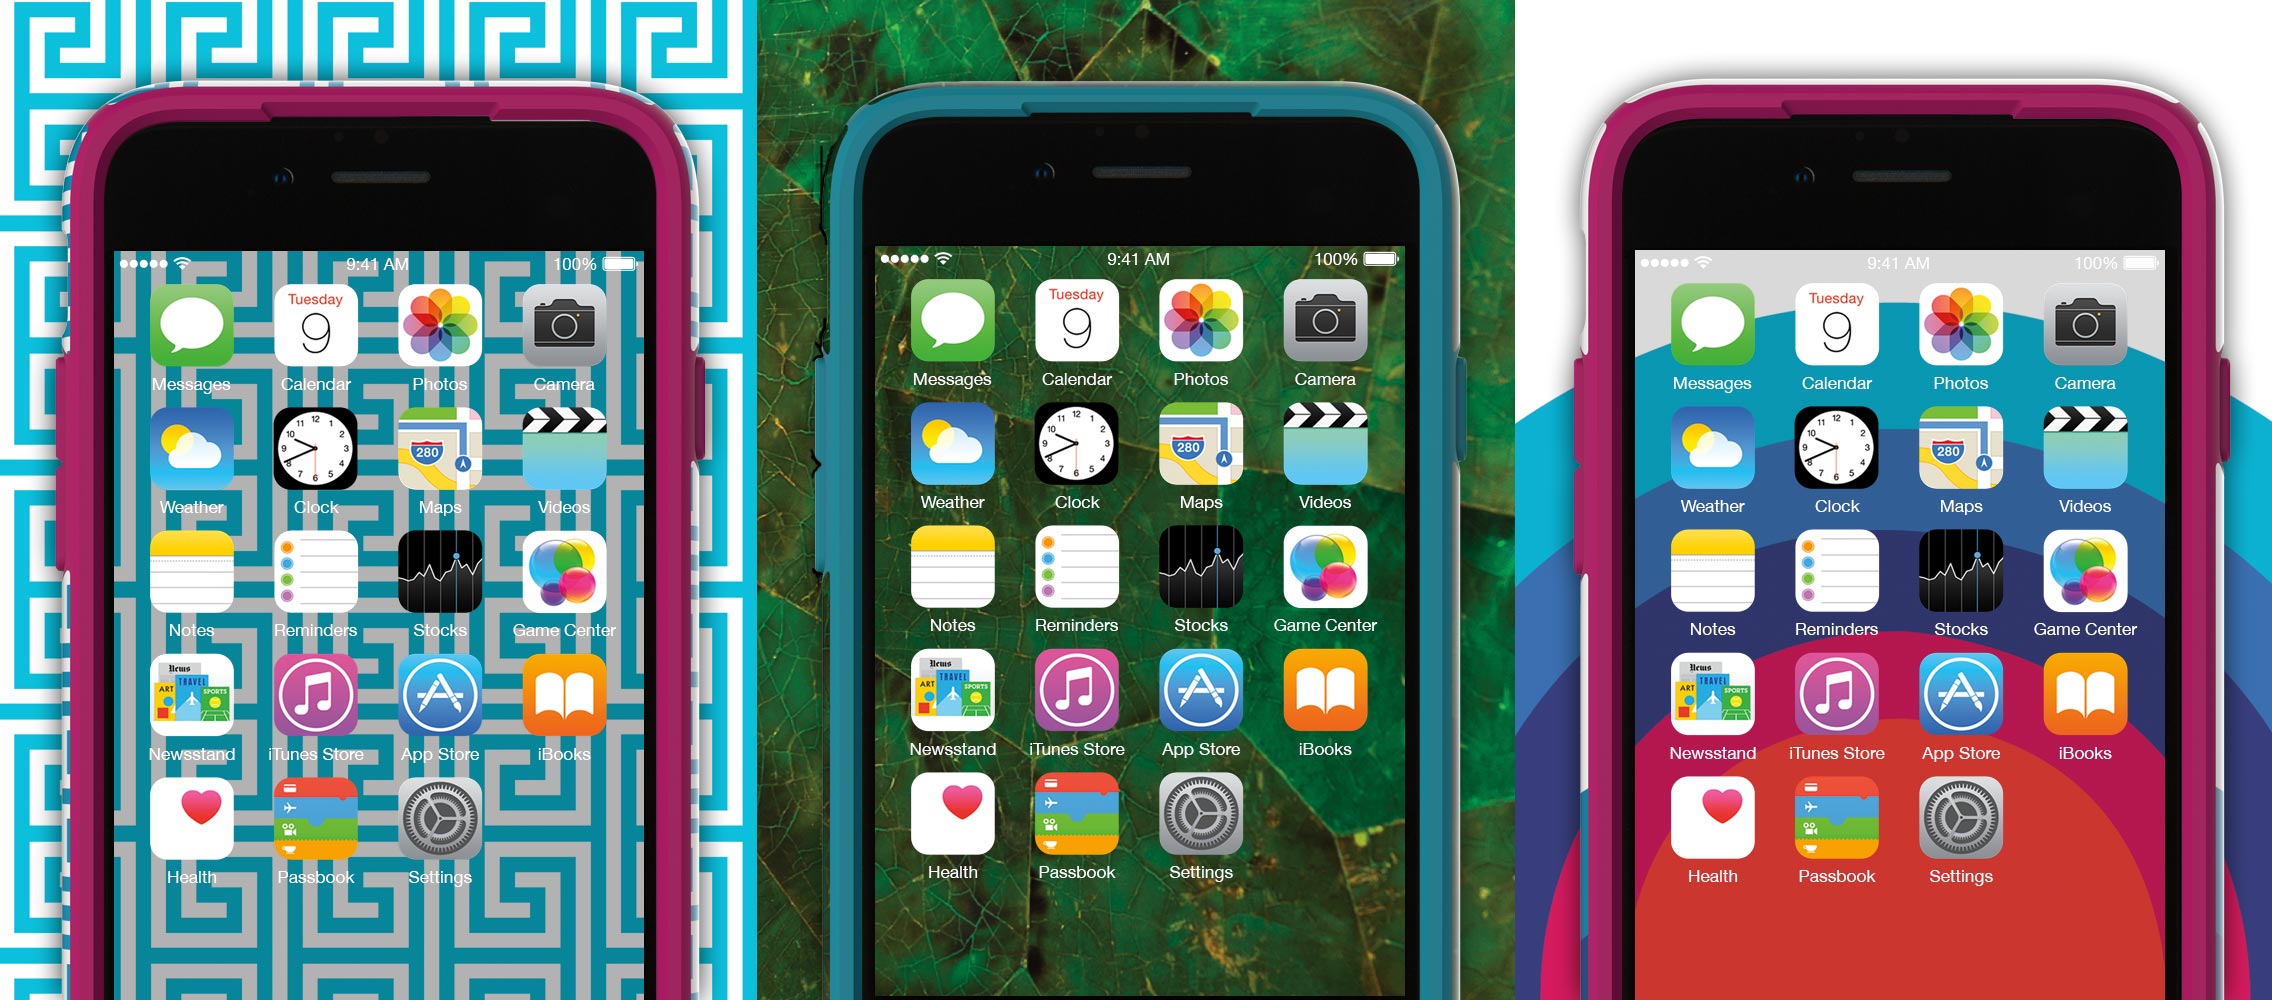 iphone 6s wallpaper,gadget,mobiltelefon,kommunikationsgerät,smartphone,tragbares kommunikationsgerät